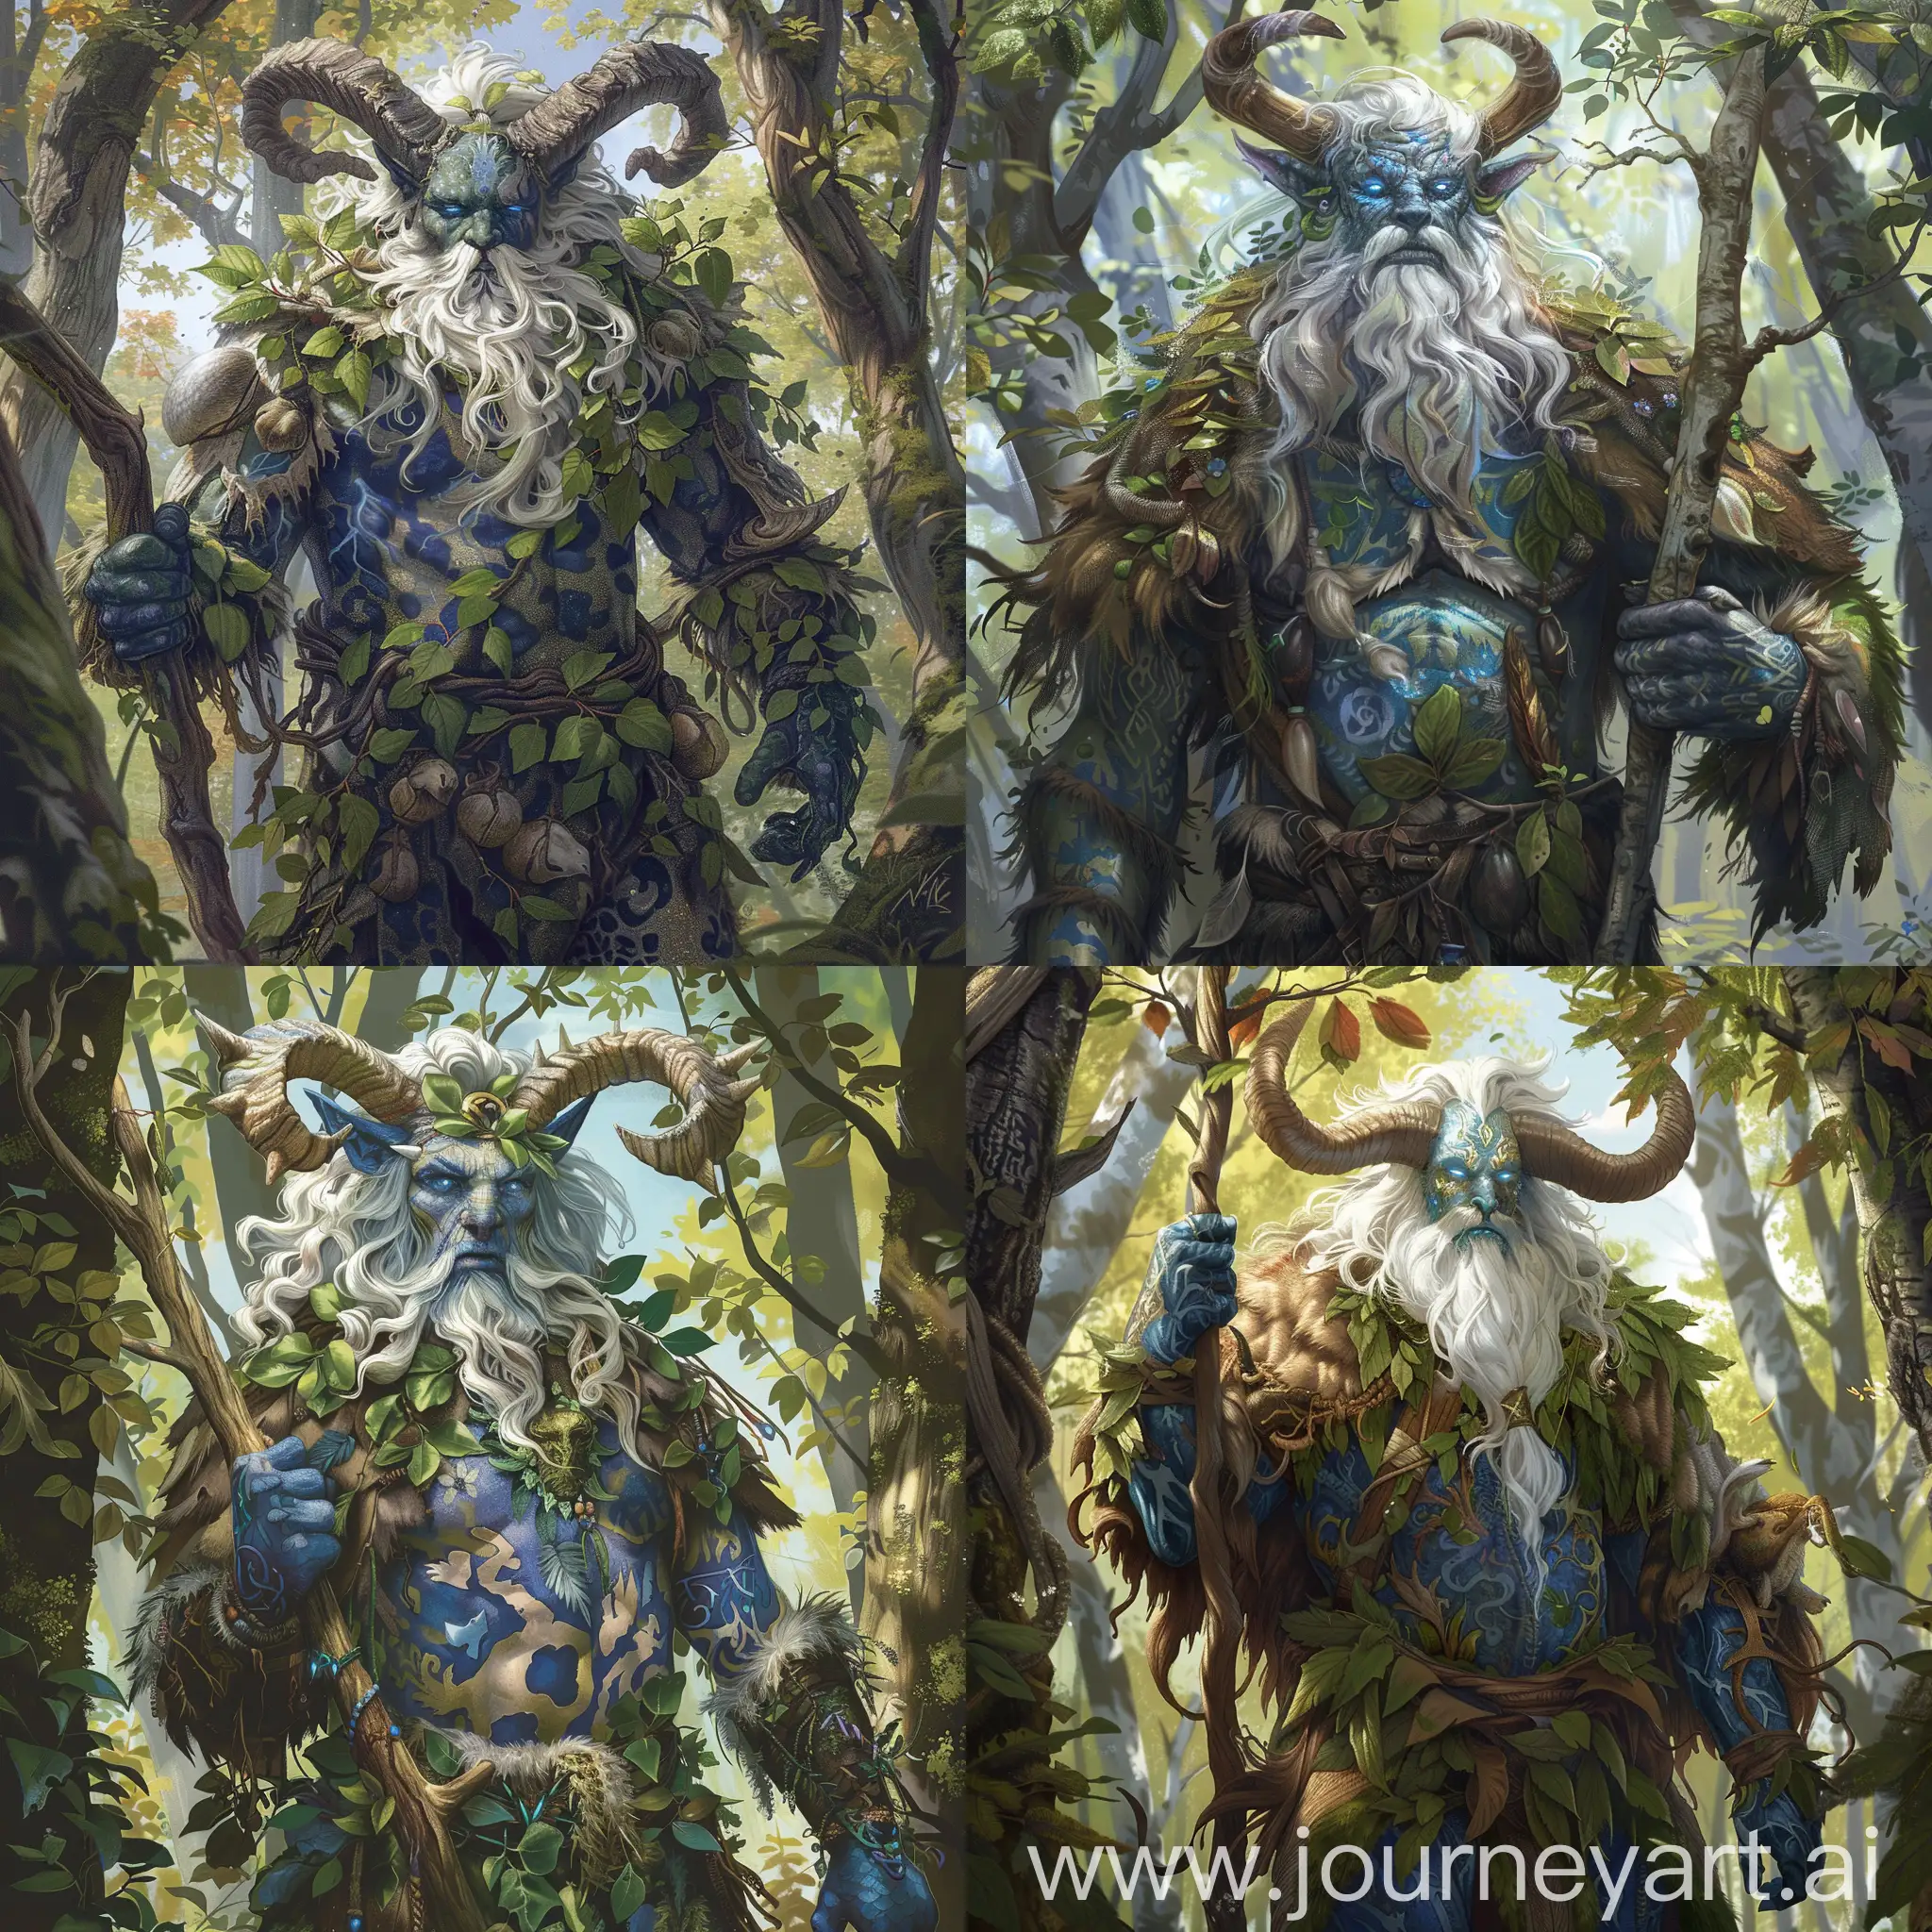 Forest-Guardian-The-Serene-Firbolg-Wanderer